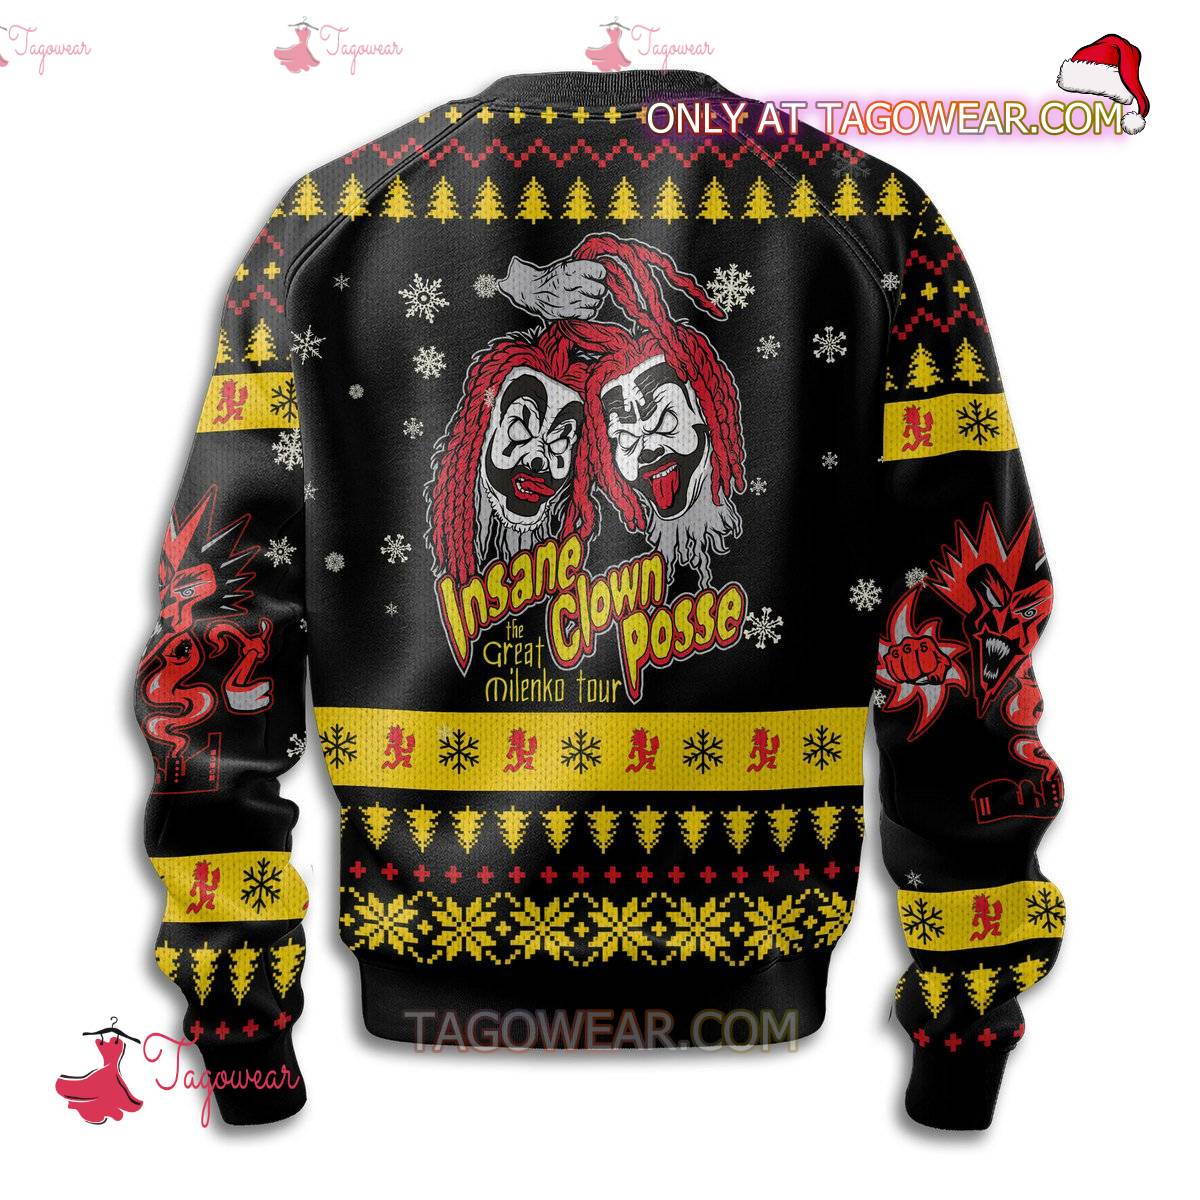 Insane Clown Posse The Great Milenko Tour Ugly Christmas Sweater b